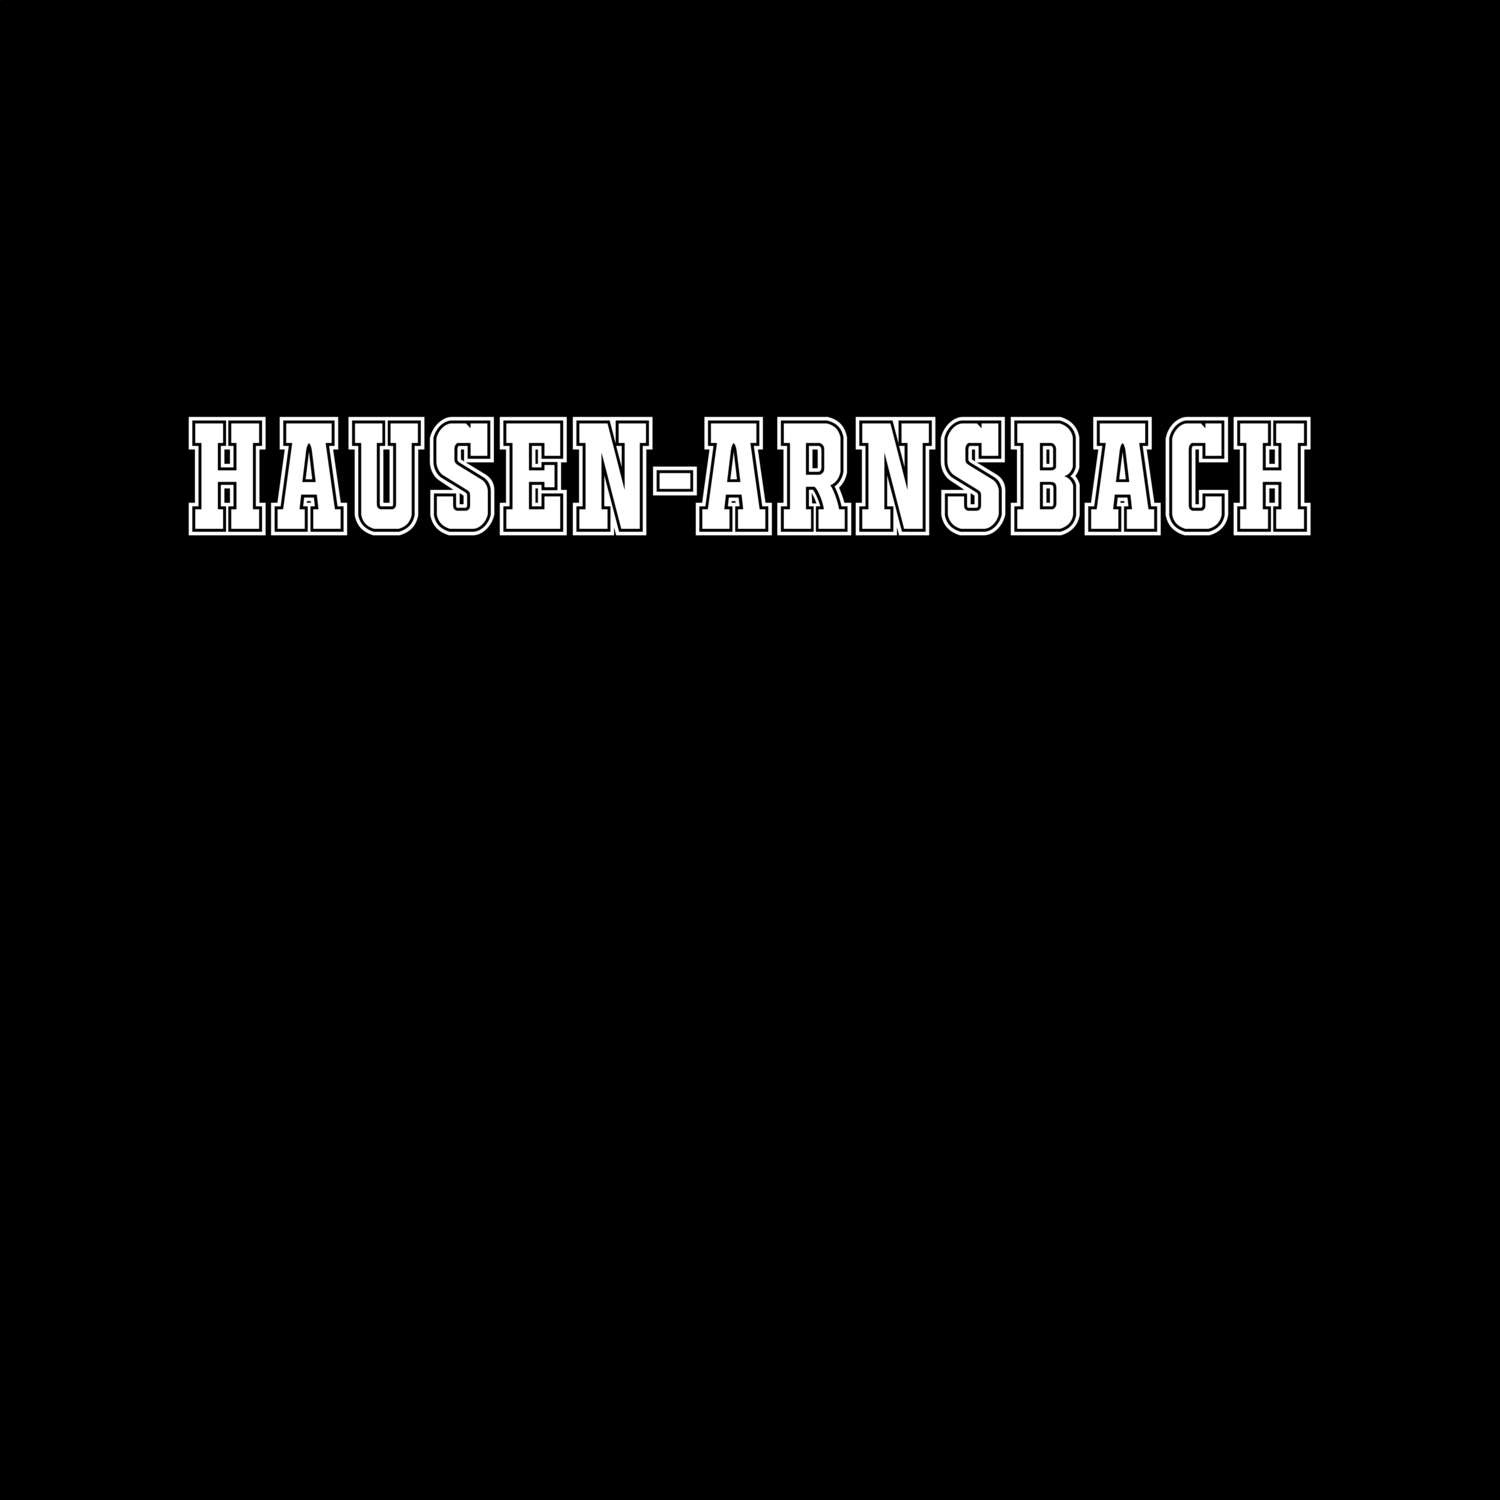 Hausen-Arnsbach T-Shirt »Classic«